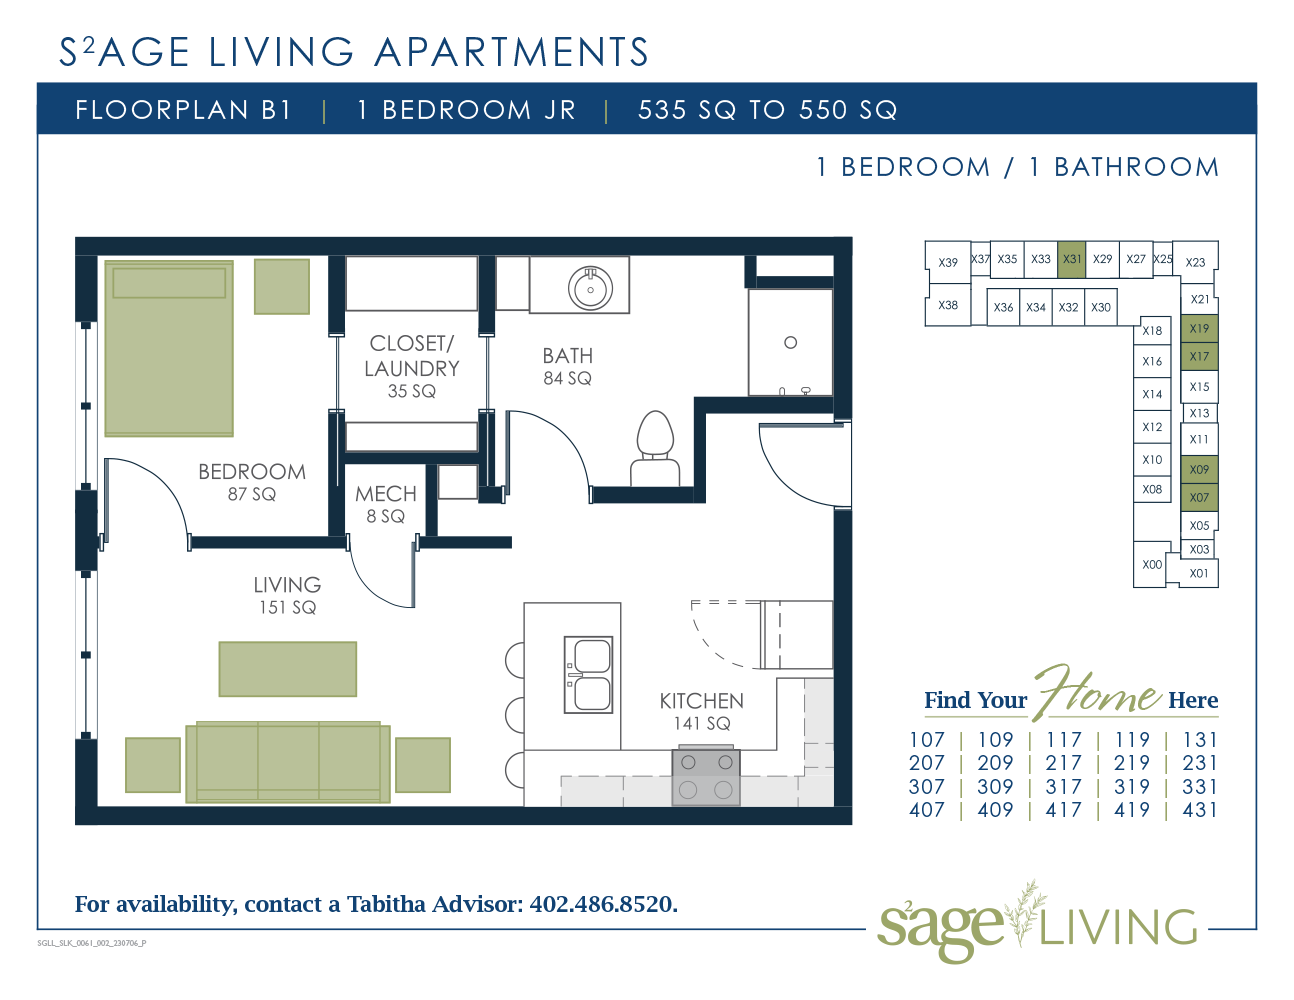 S2age Living Floor Plan, Apartment B1